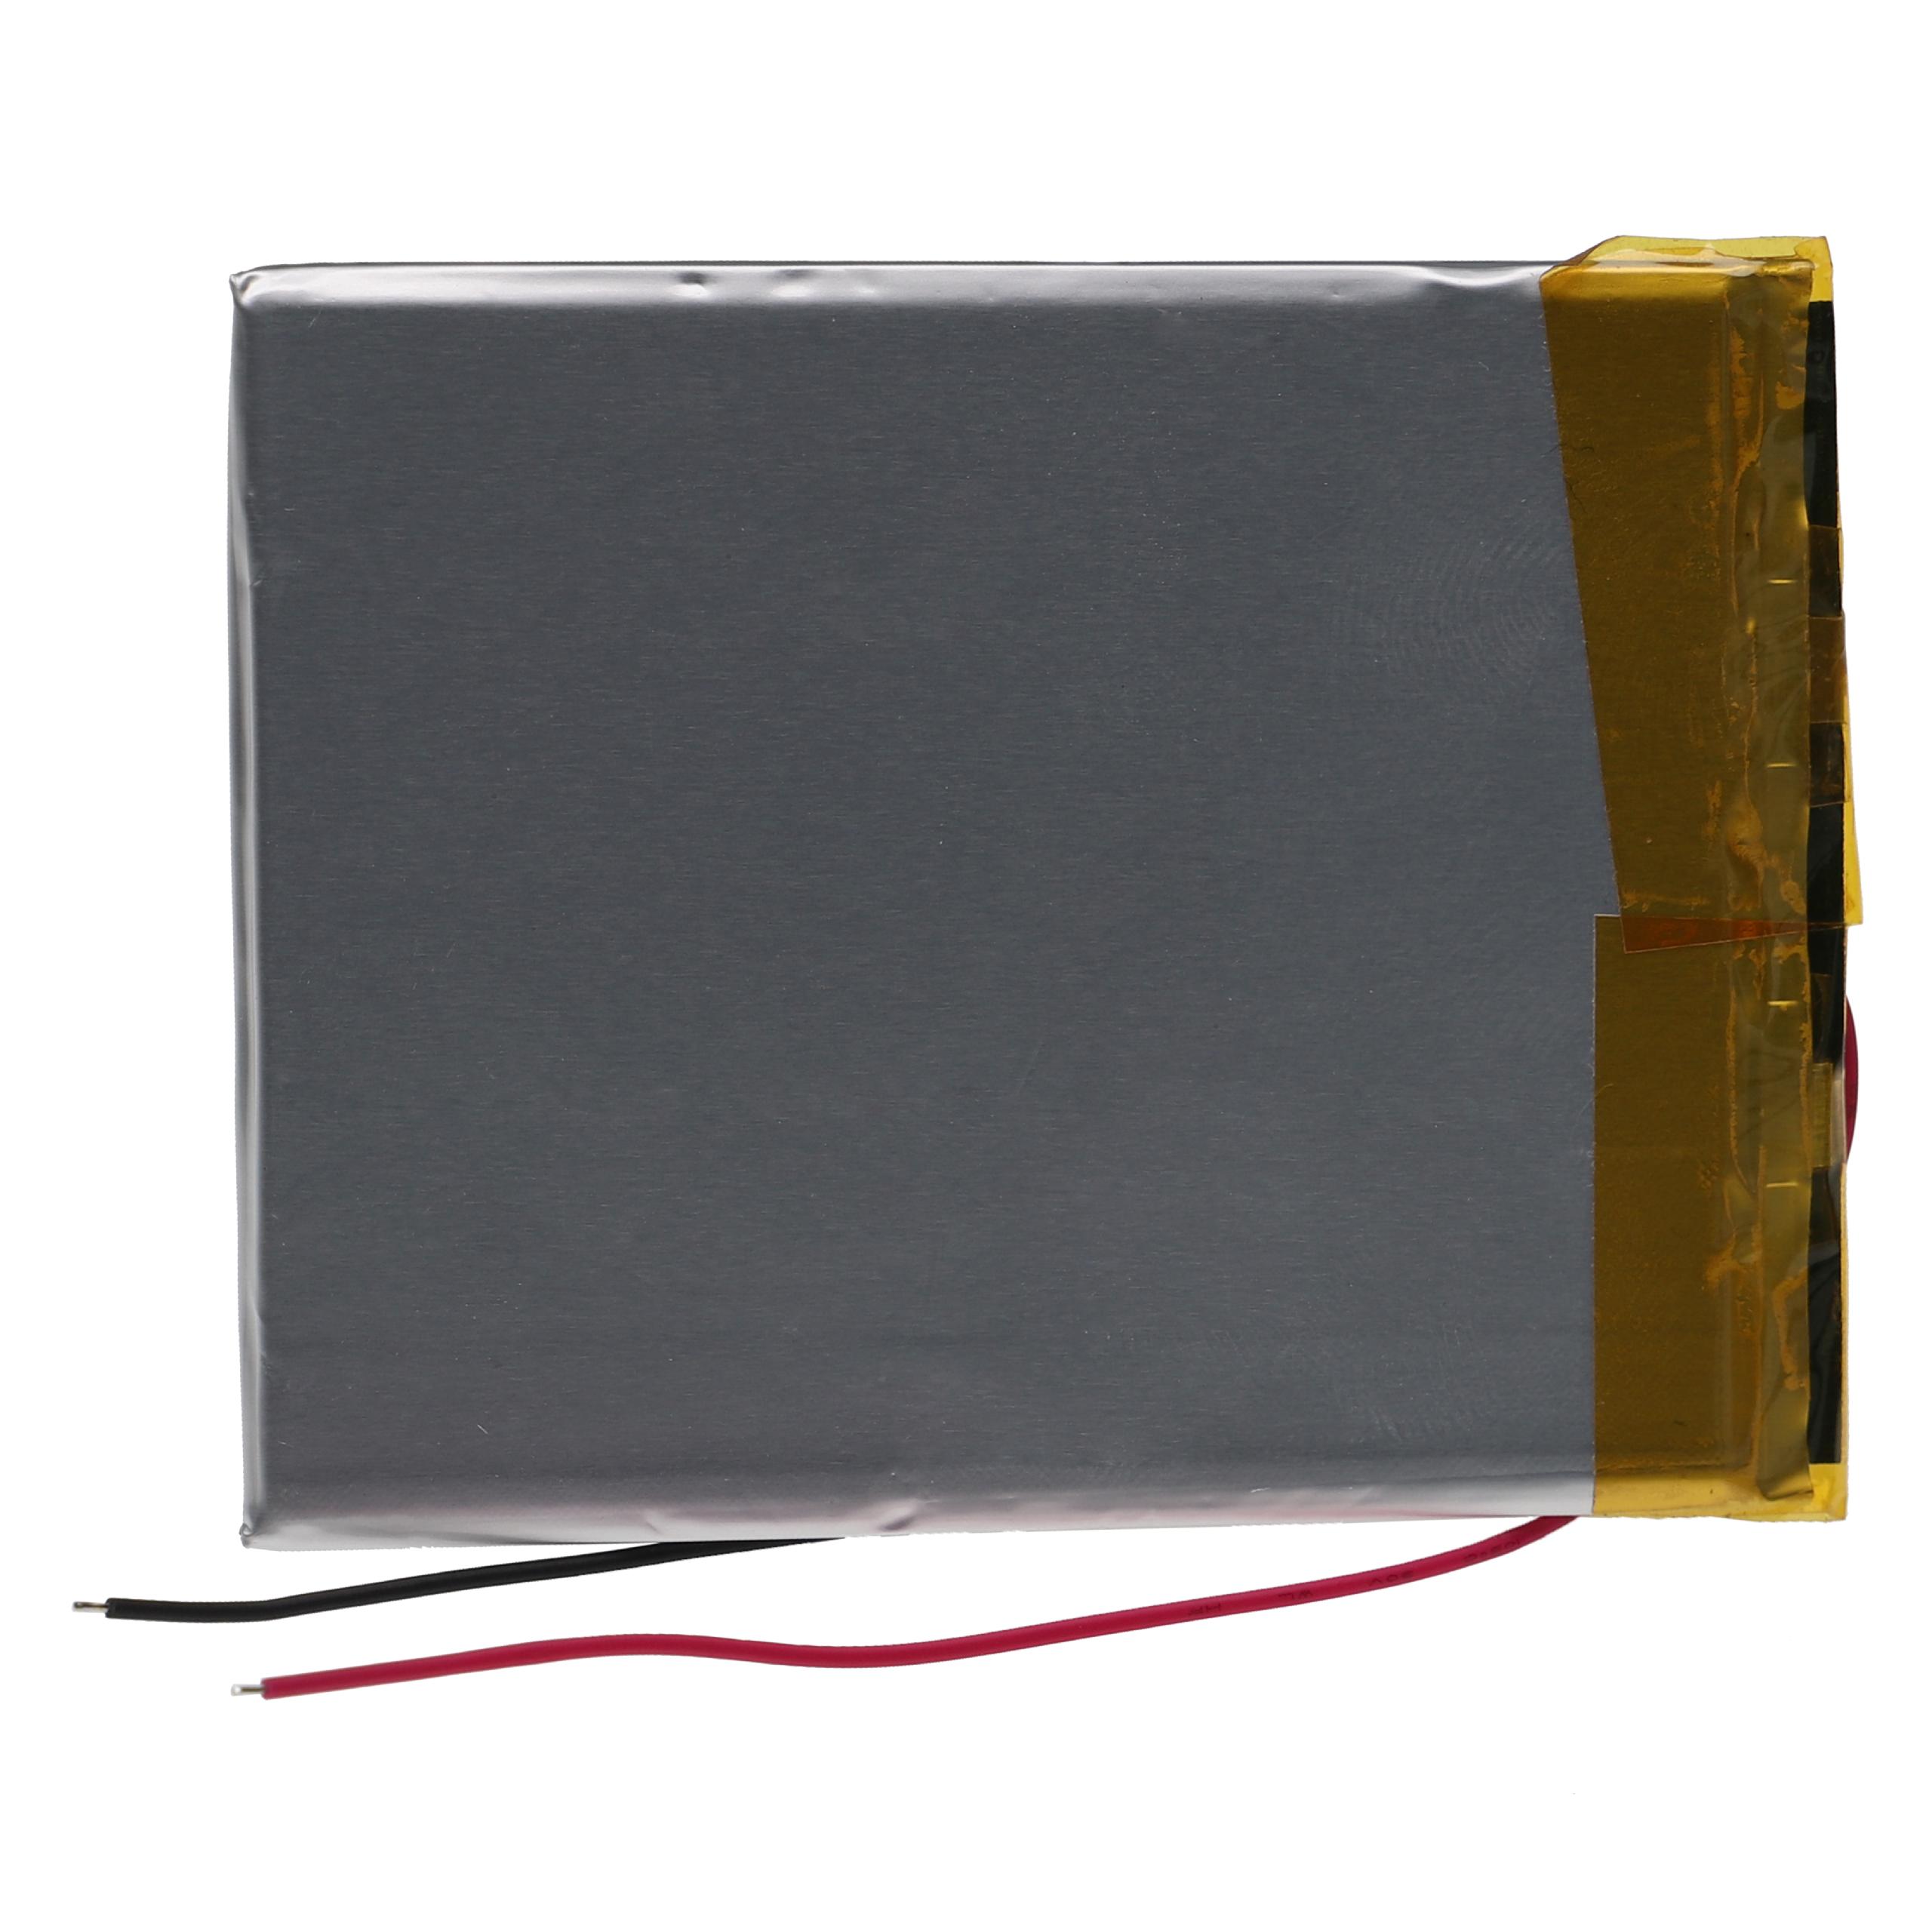 E-Book Battery Replacement for Boyue T-356575 - 2100mAh 3.7V Li-polymer